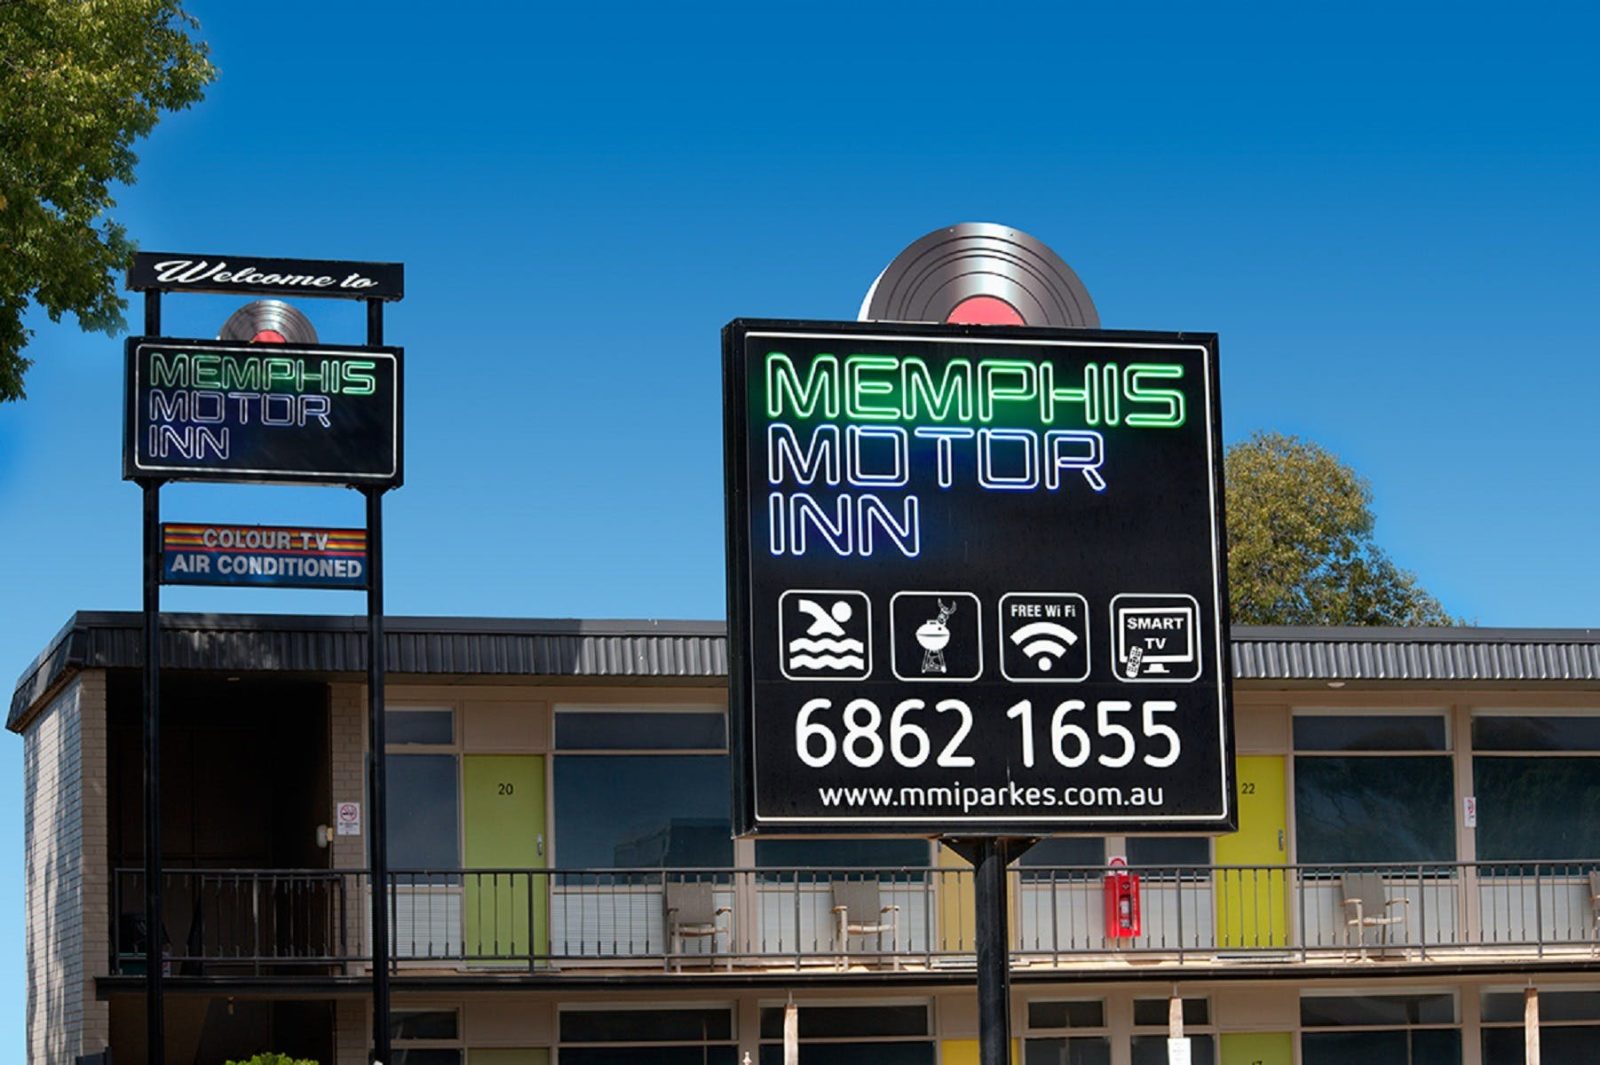 Memphis Motor Inn